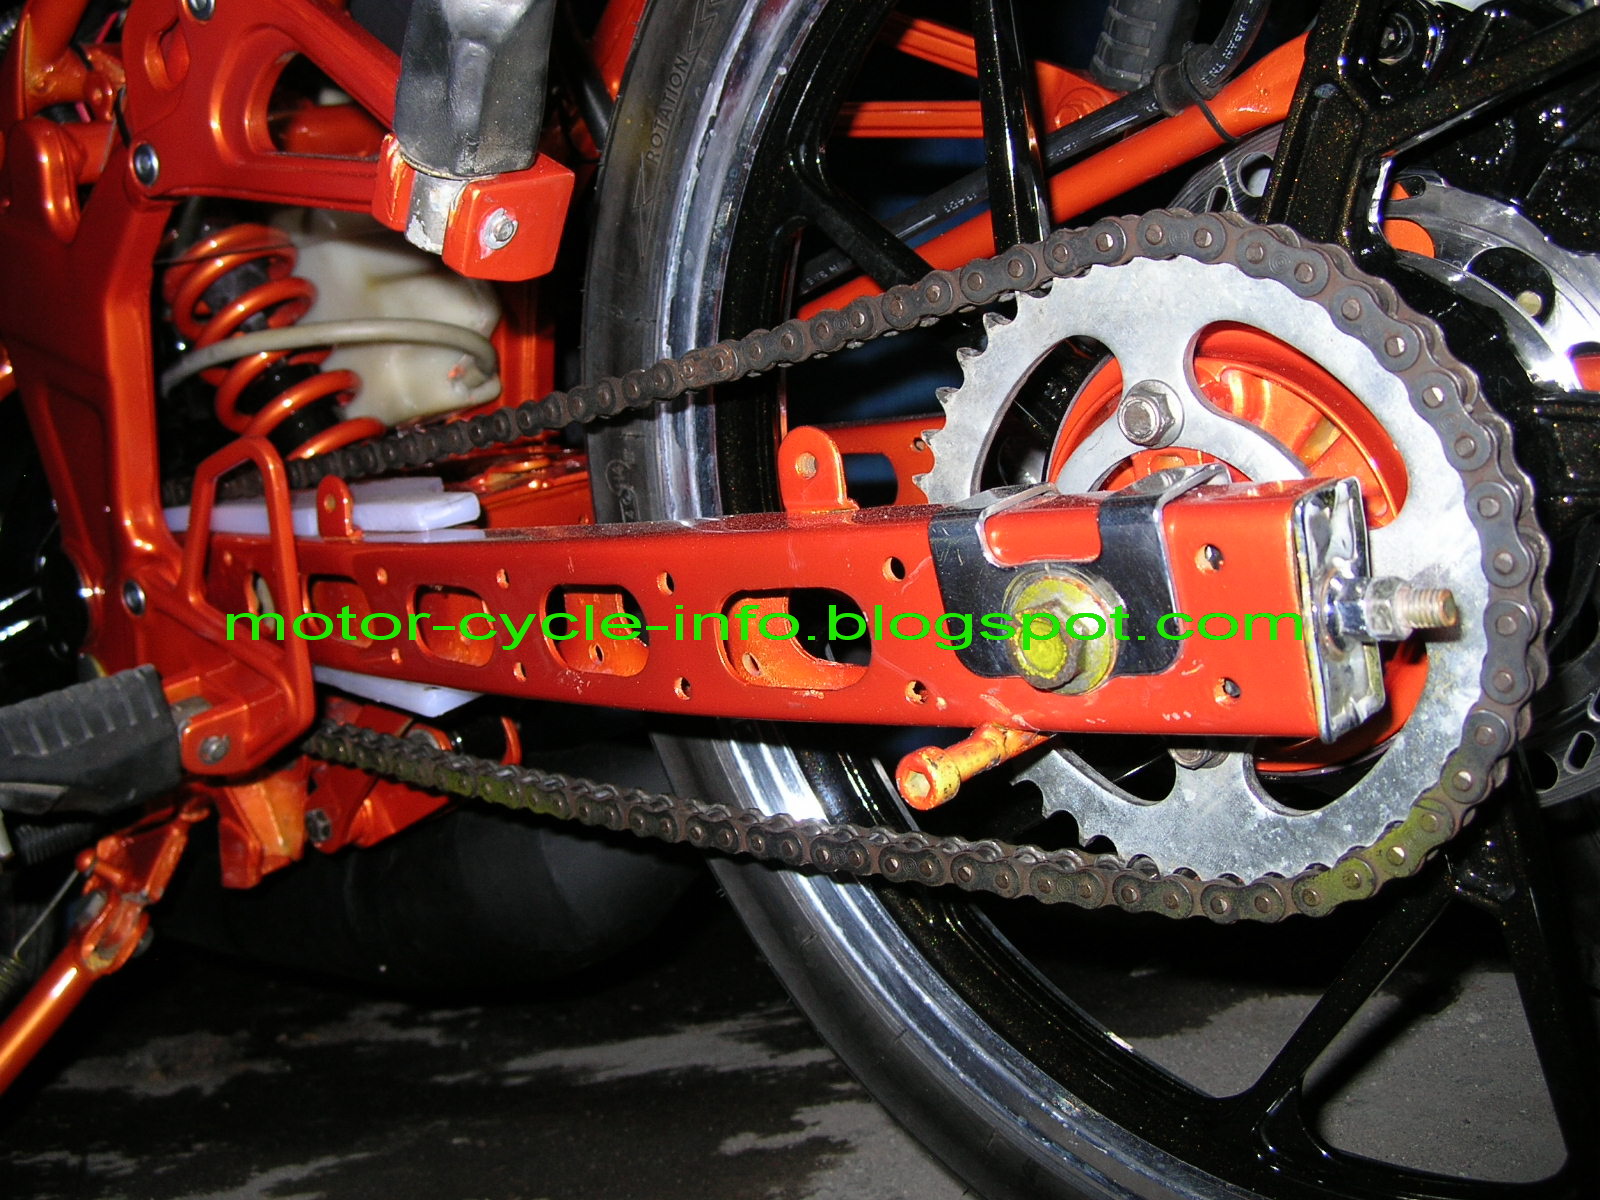 Gambar Kawasaki Ninja Modif Extreme Jogja Motorcycle Motors